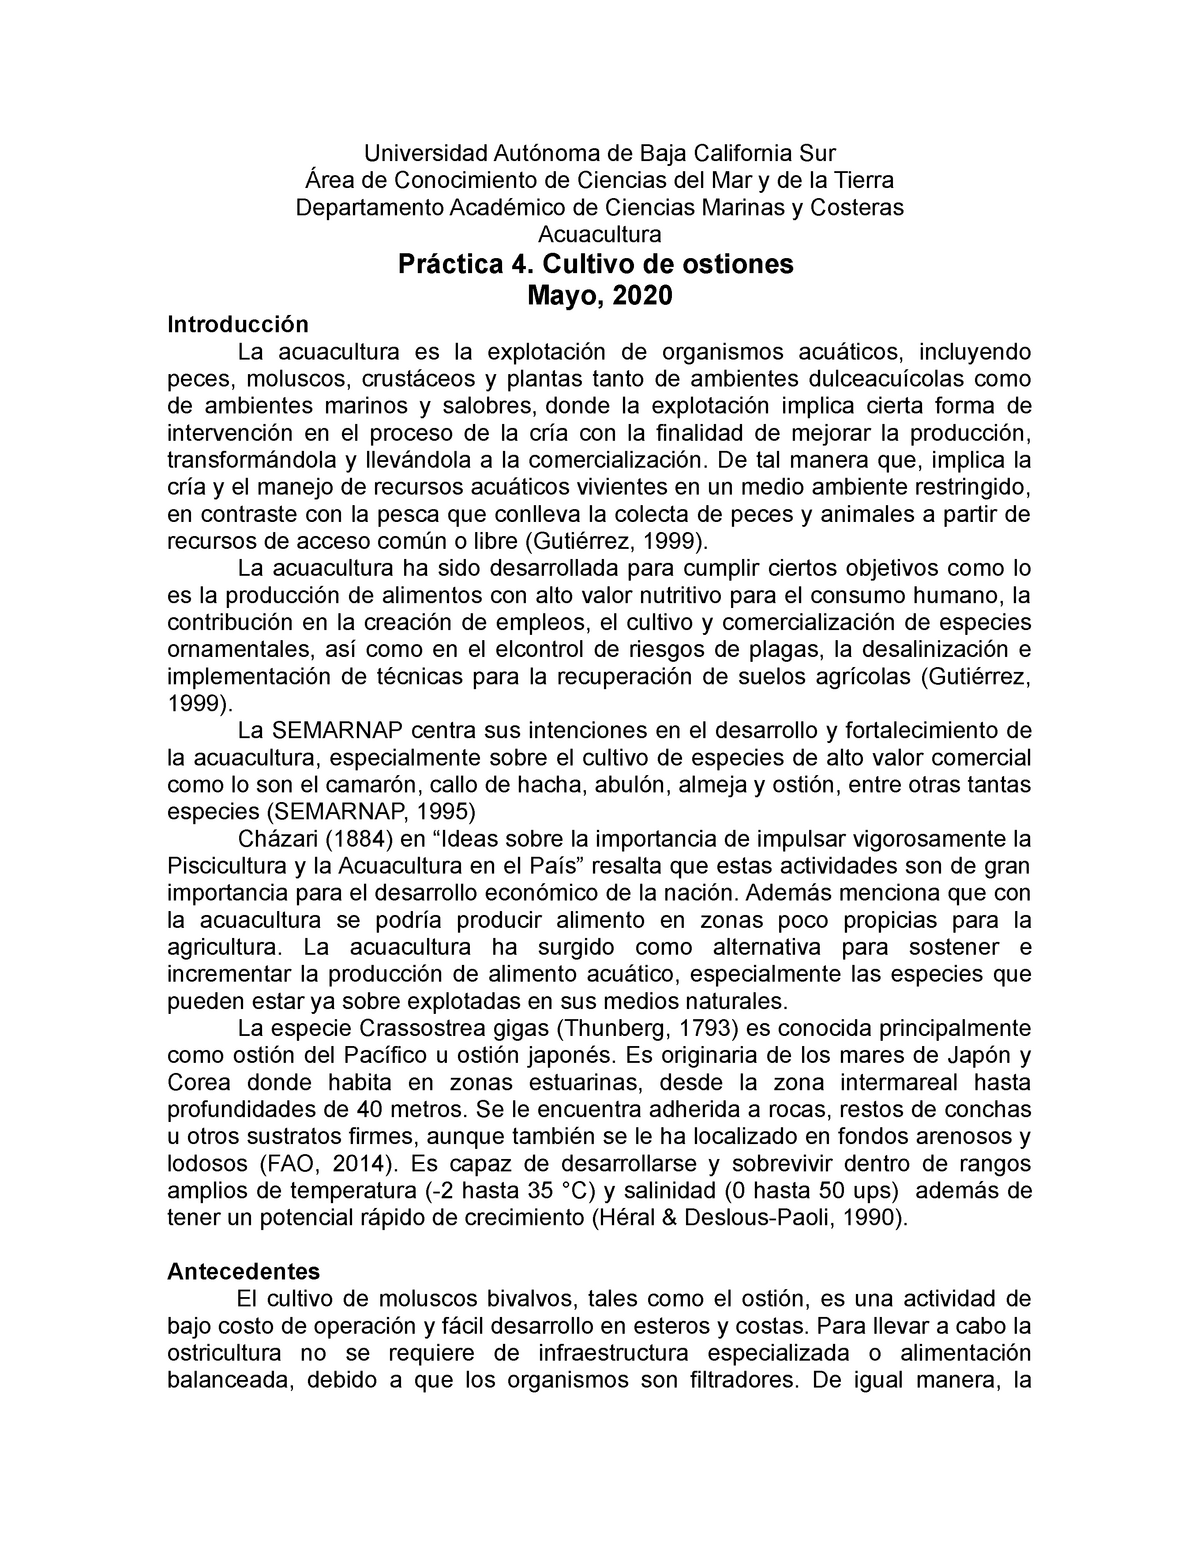 Acuacultura Practica 4-Ostiones - Universidad Autónoma de Baja ...